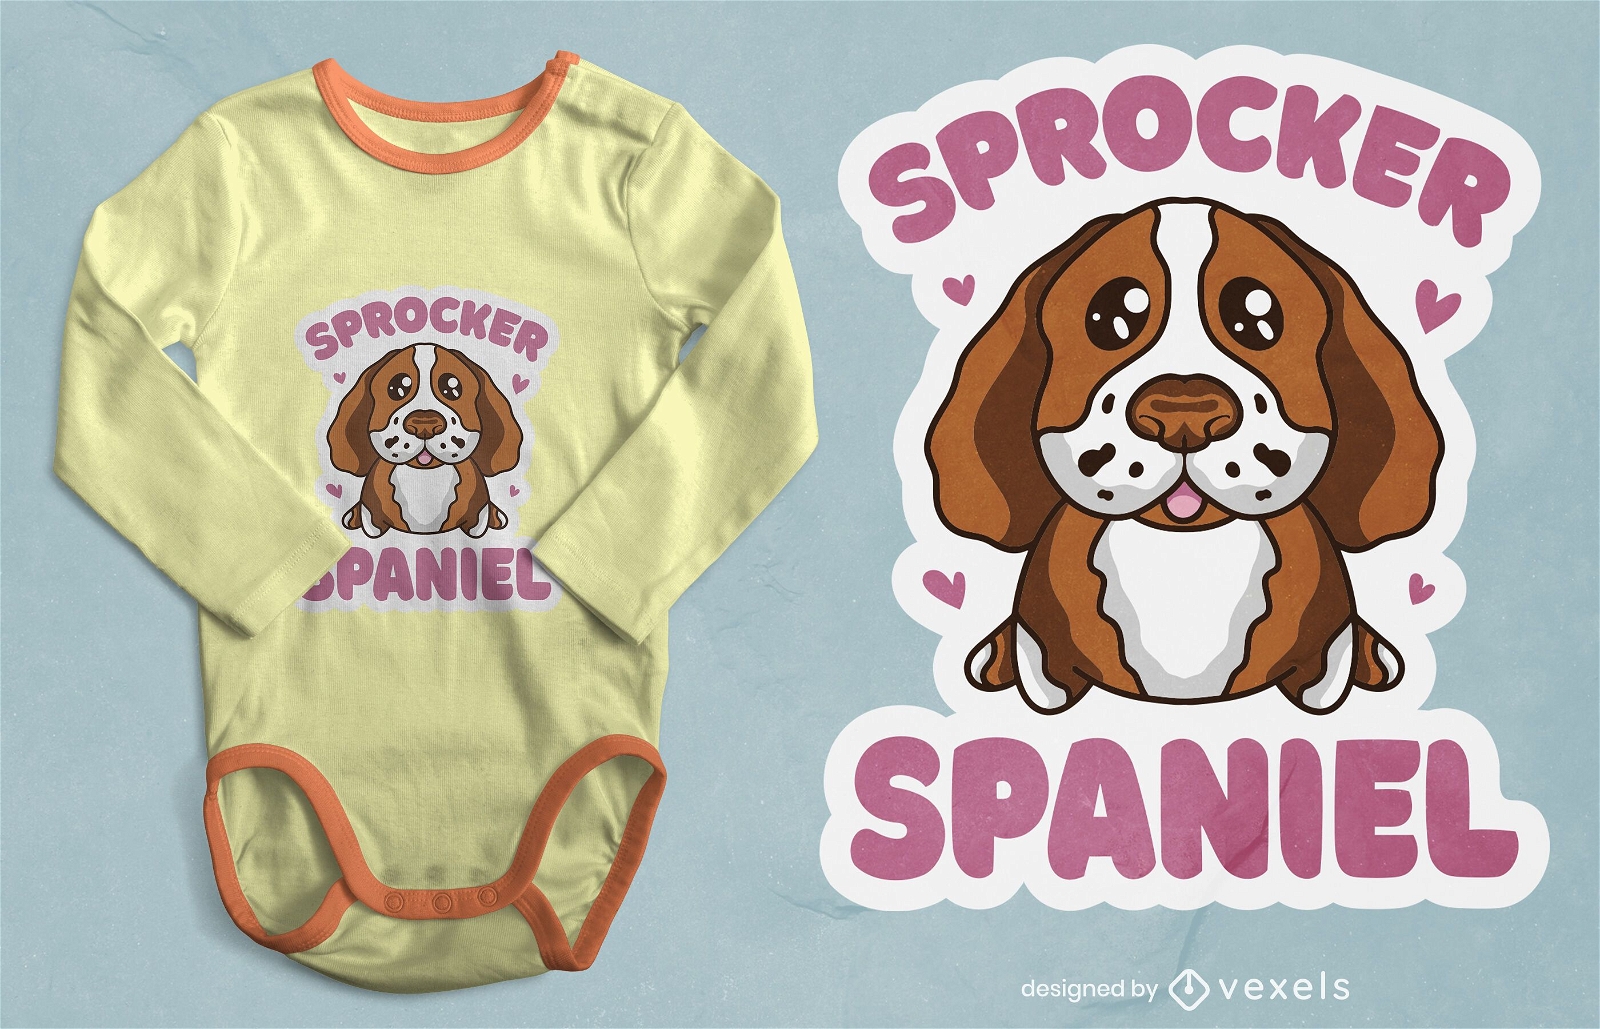 Sprocker spaniel t-shirt design